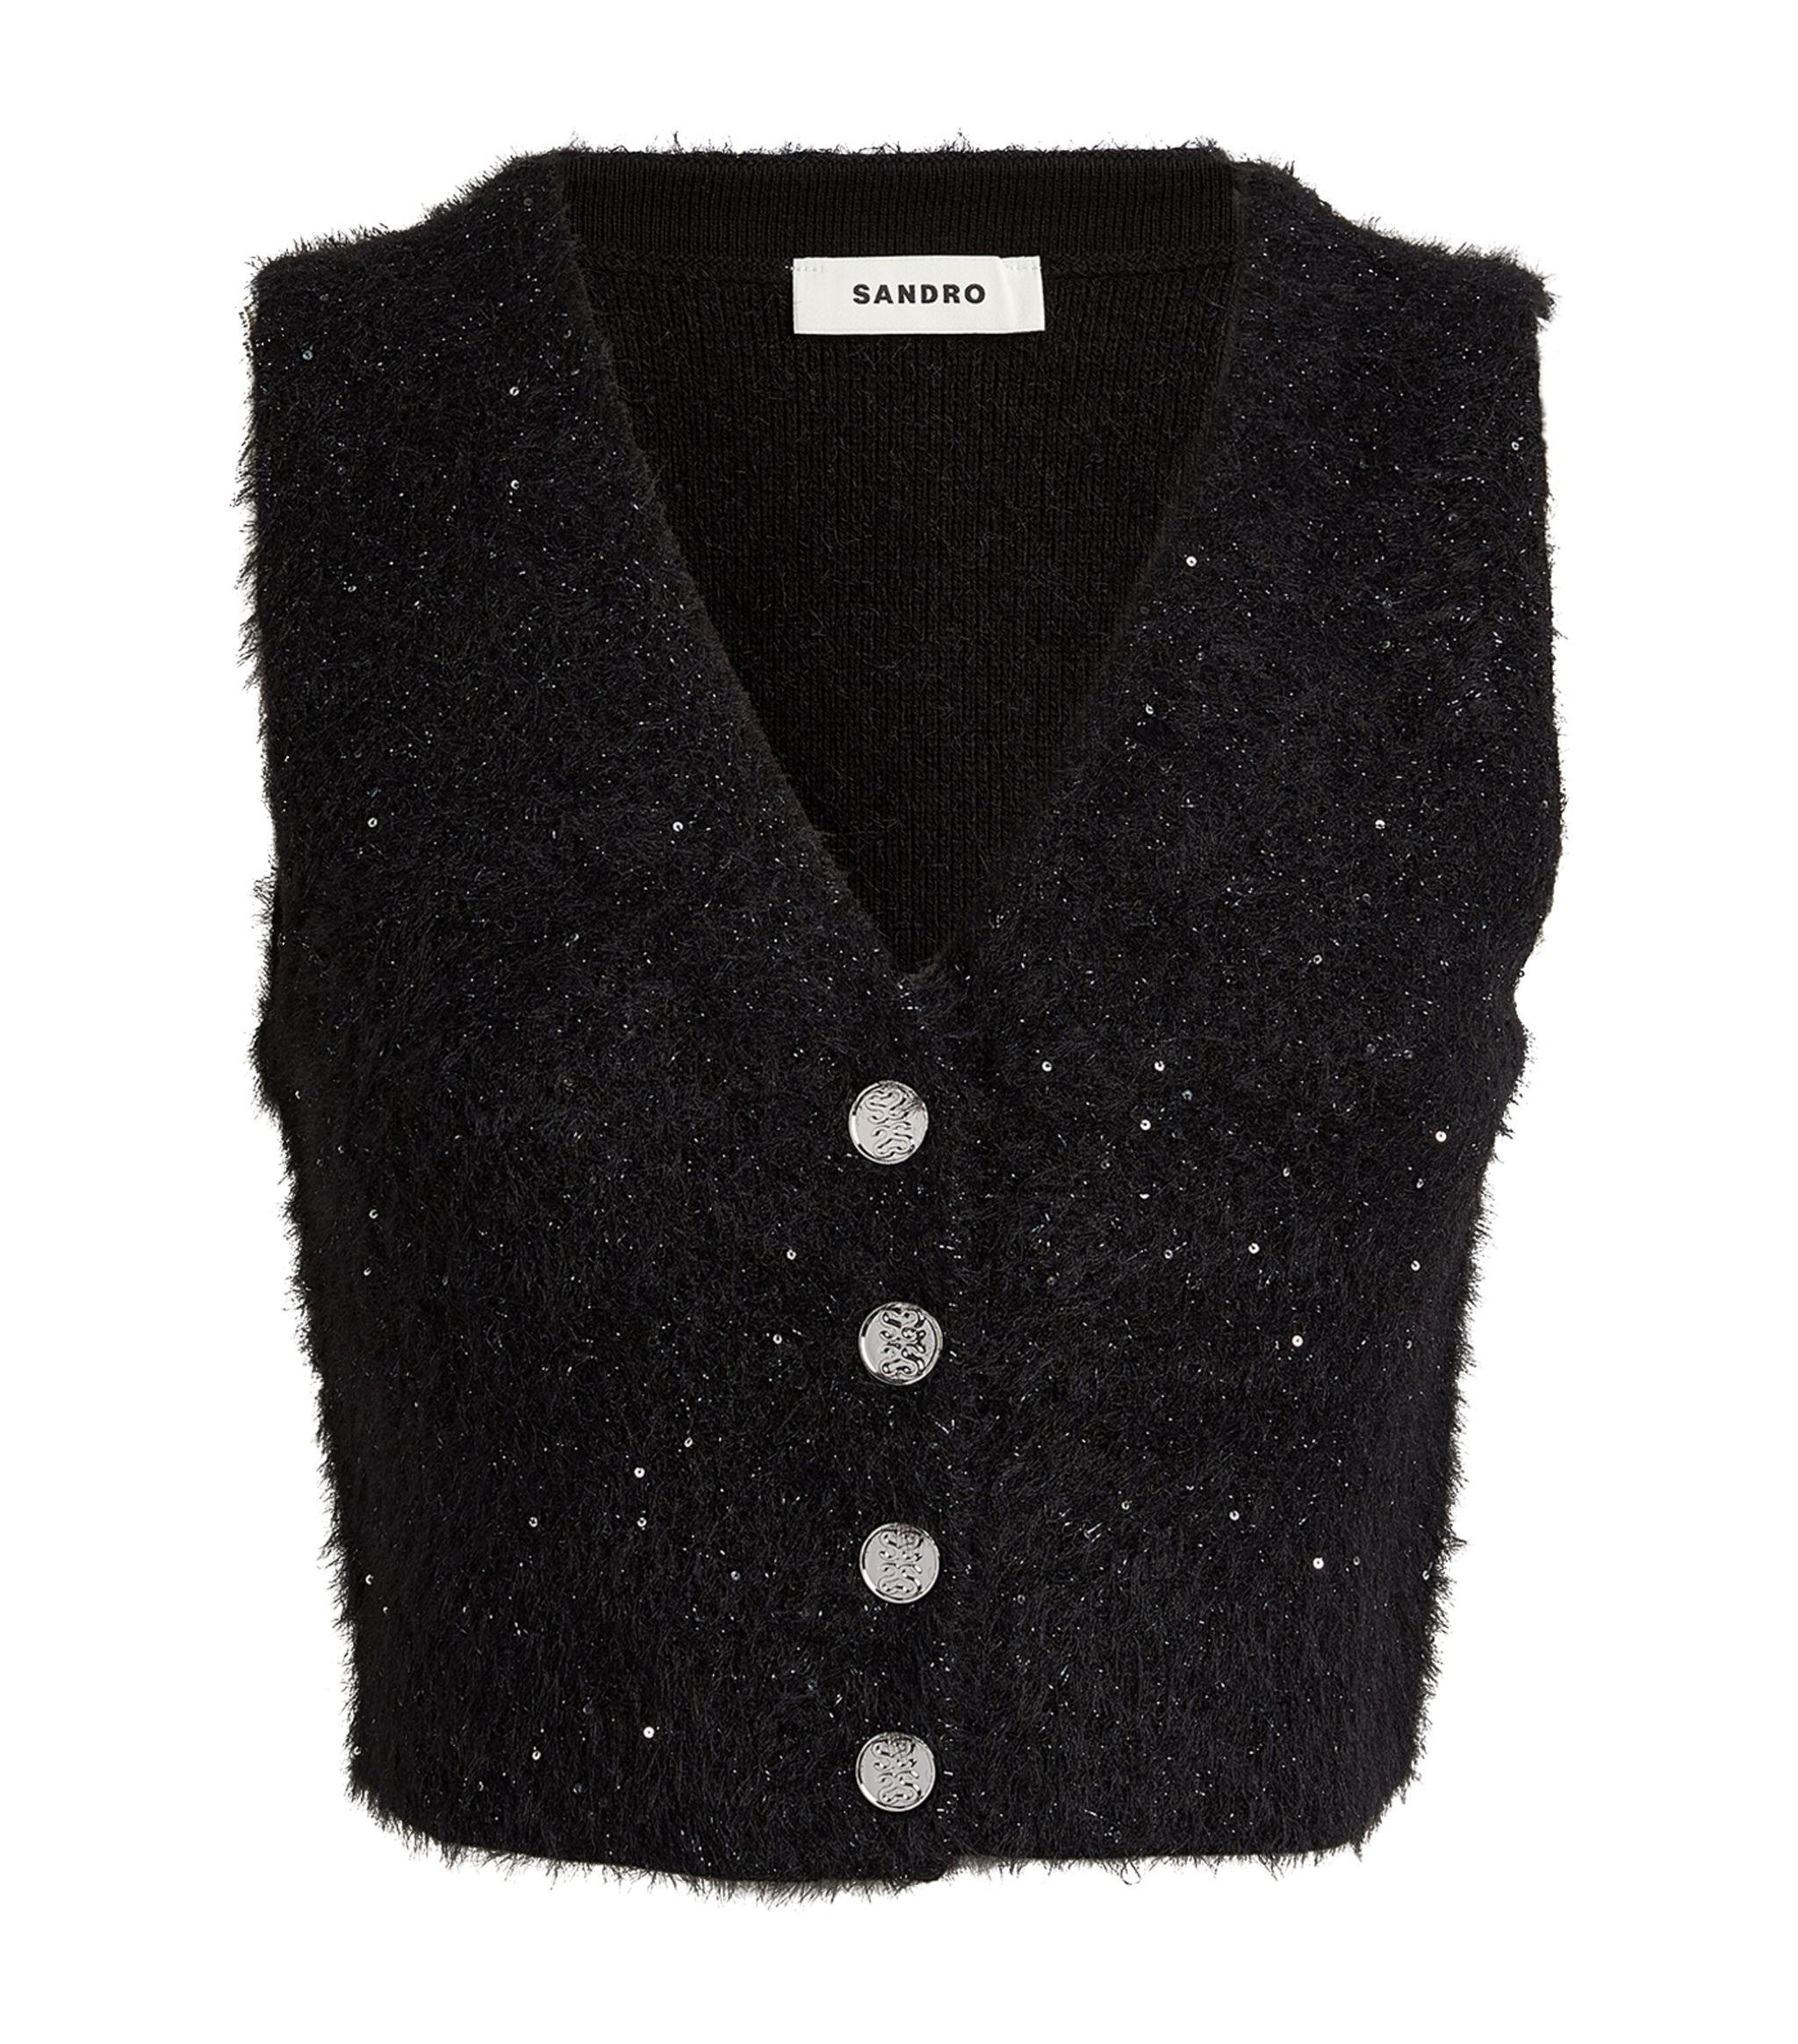 Sandro Metallic Tweed Crop Top in Black | Lyst